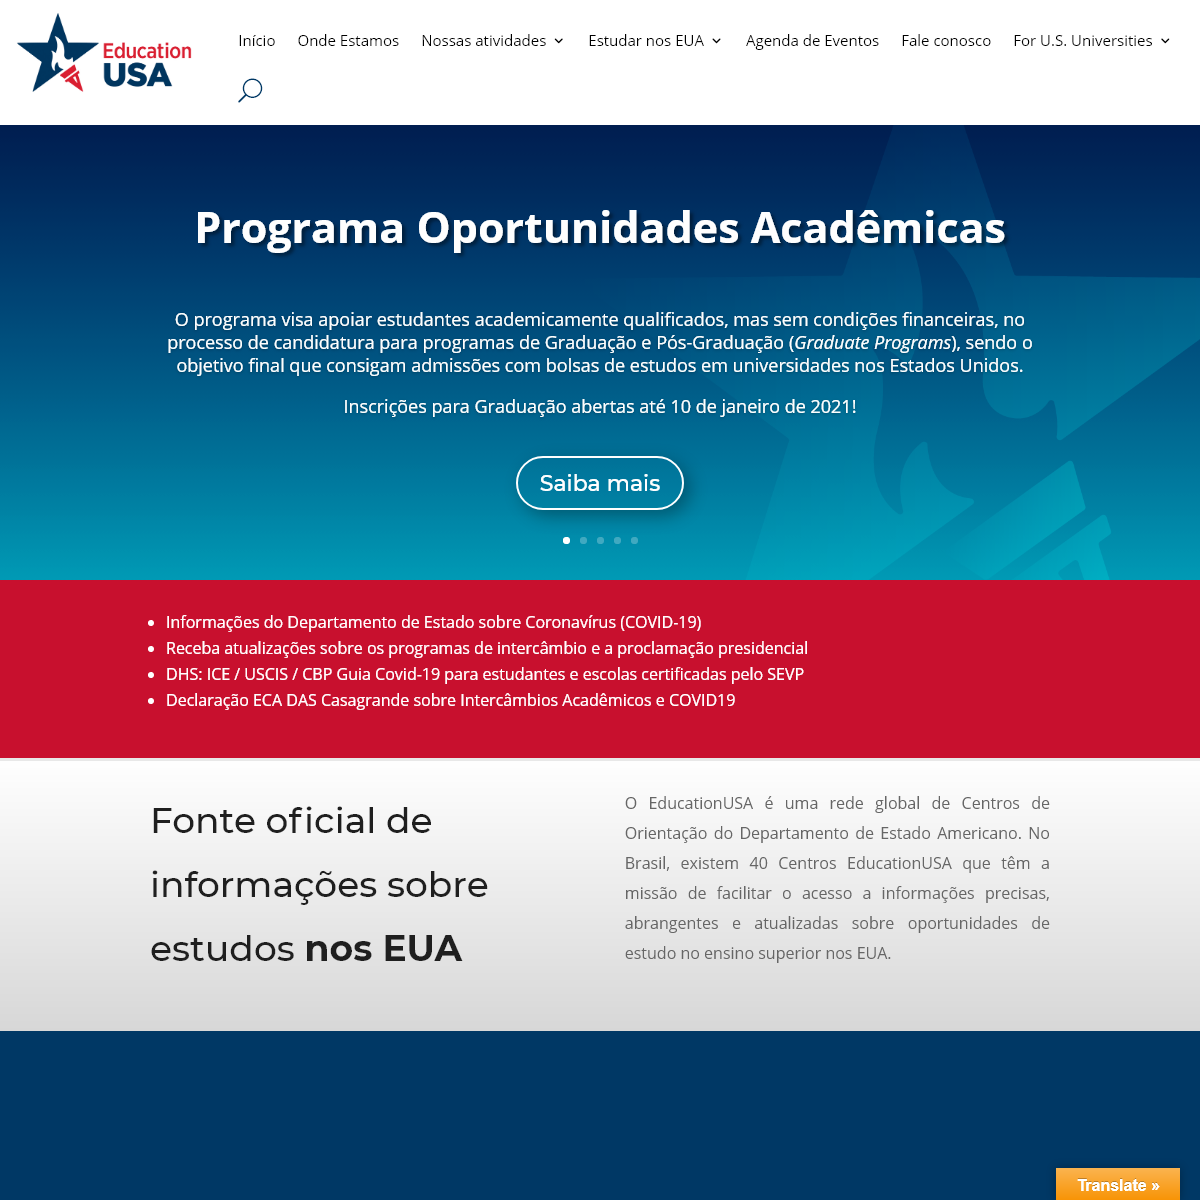 A complete backup of educationusa.org.br